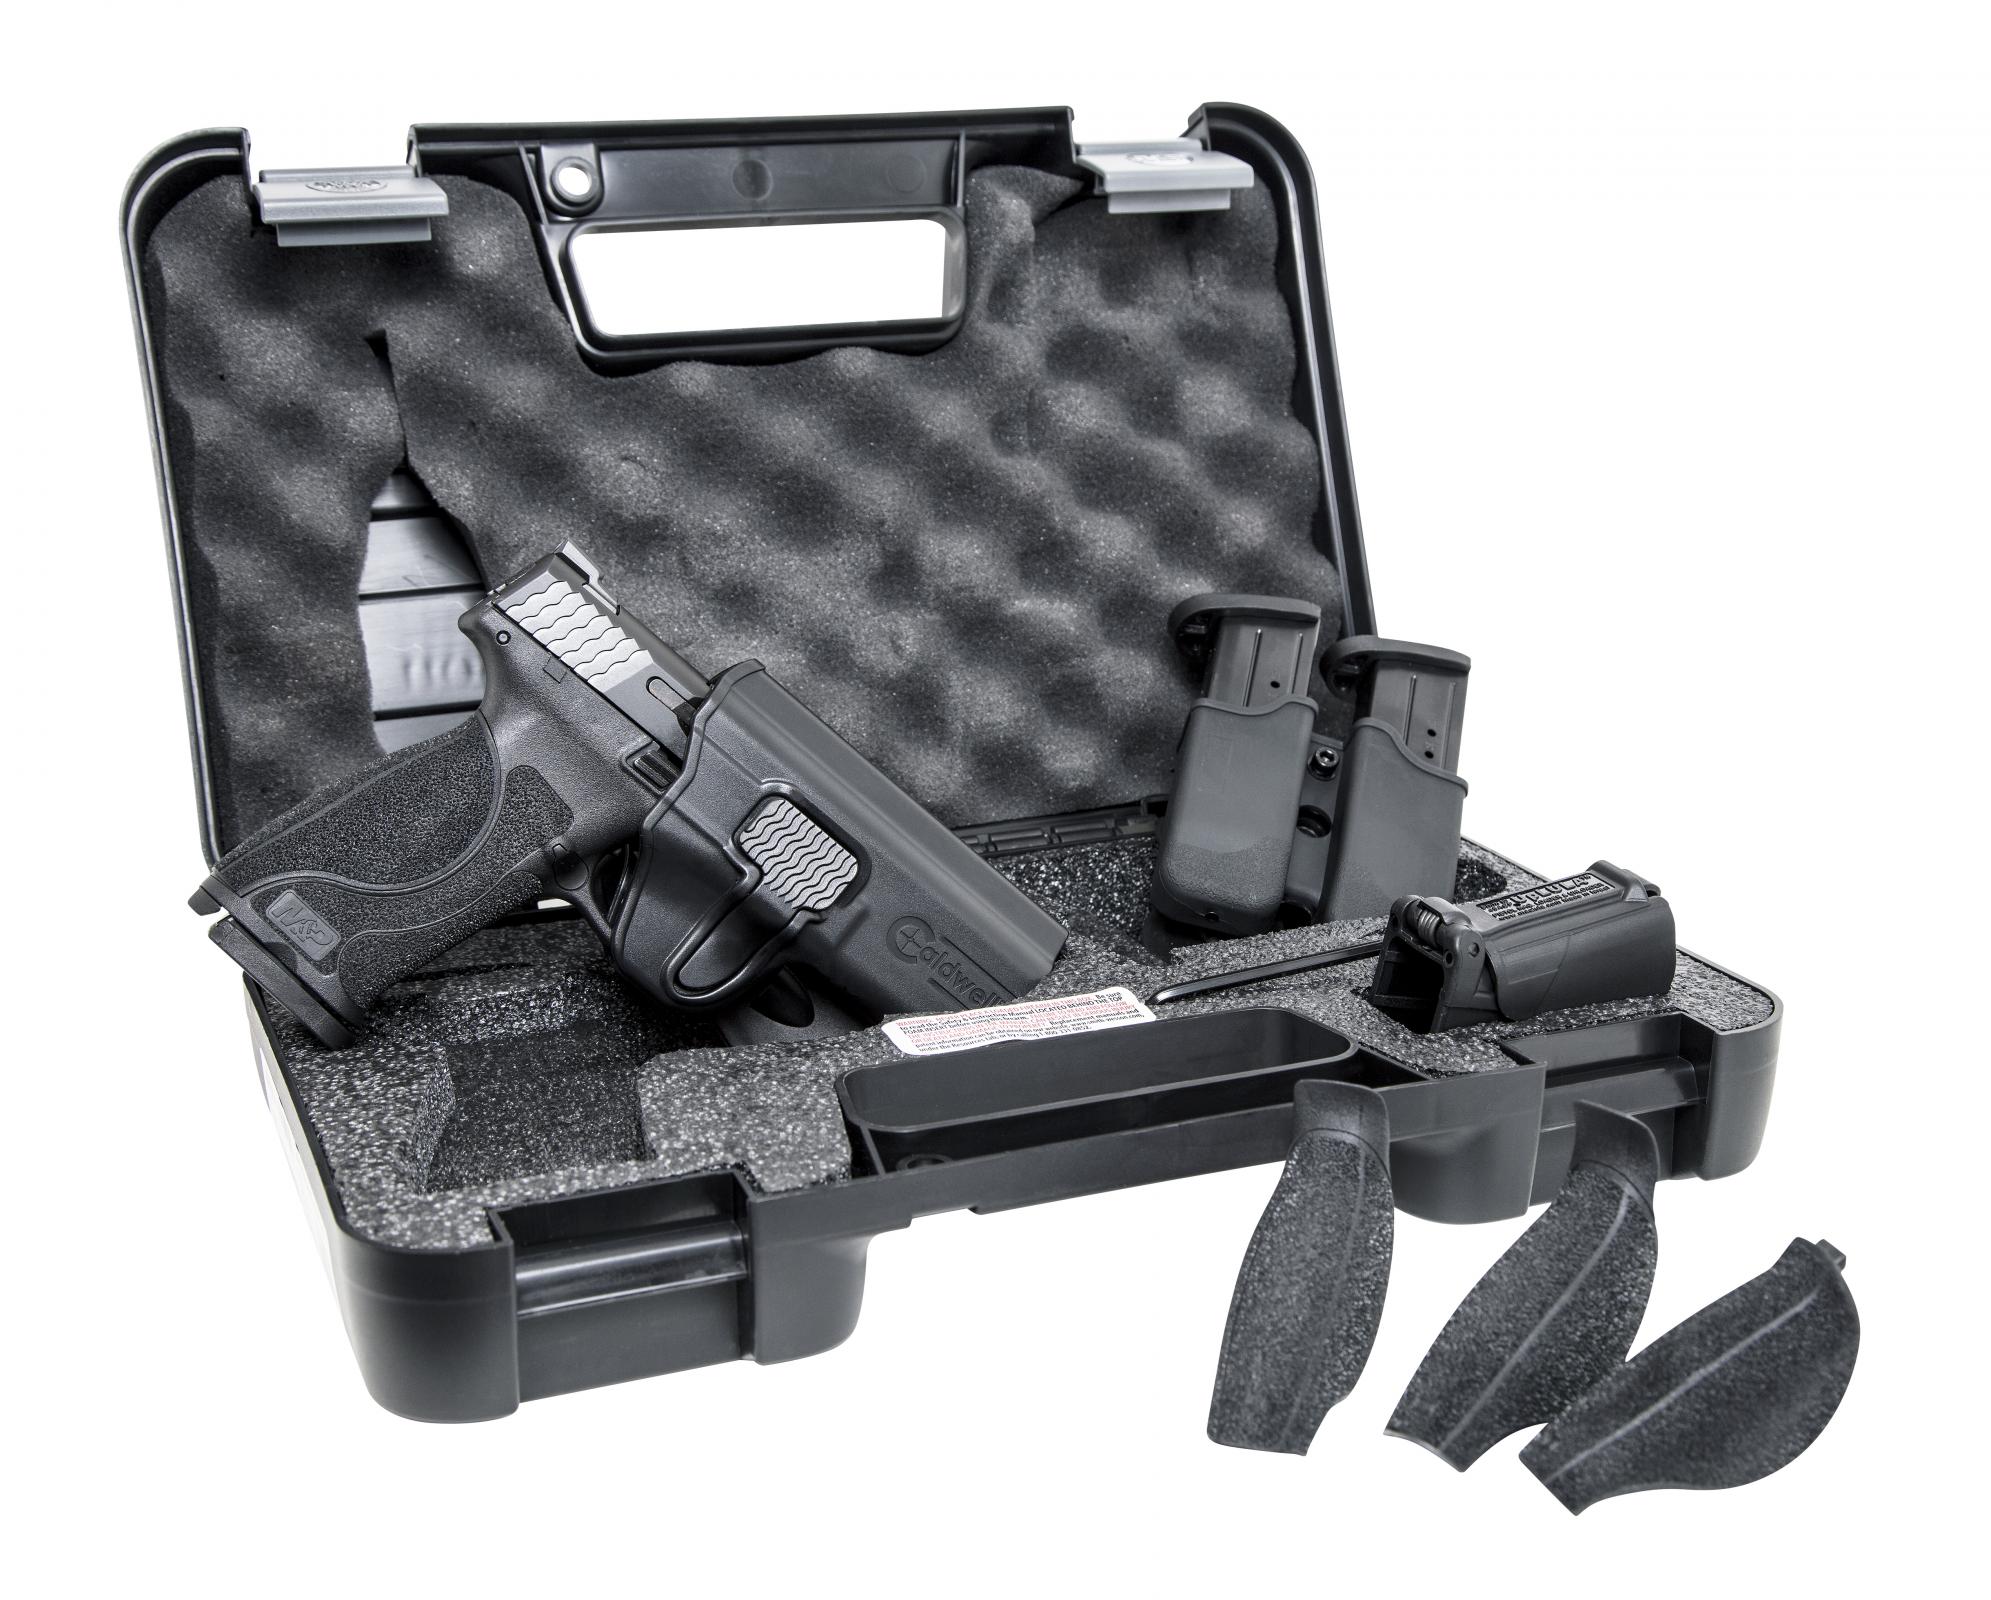 S&W M&P9 M2.0 Carry & Range Kit